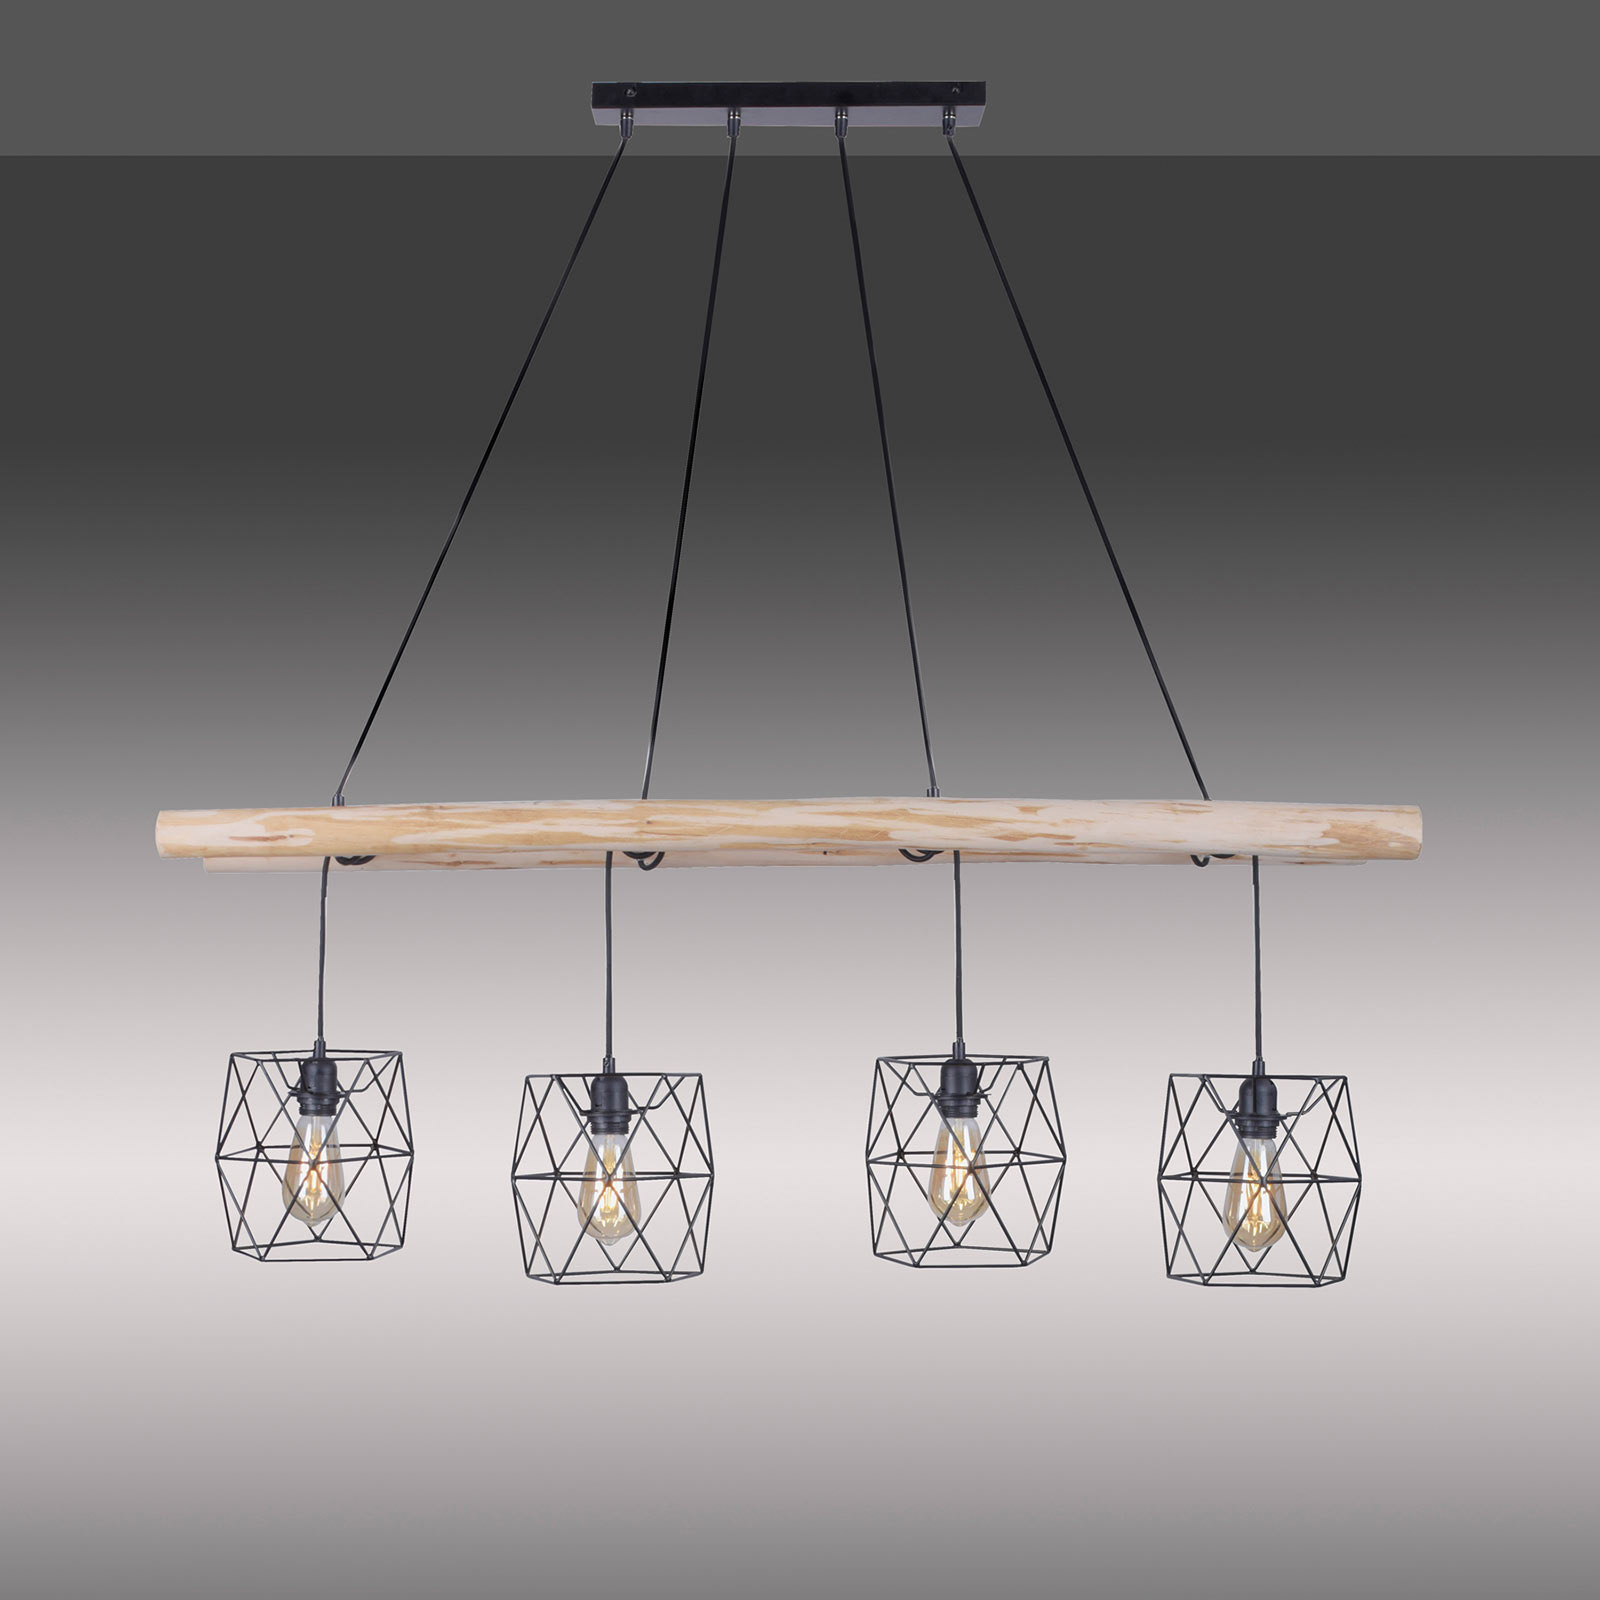 Hanglamp Edgar van hout, 4-lamps kooikap